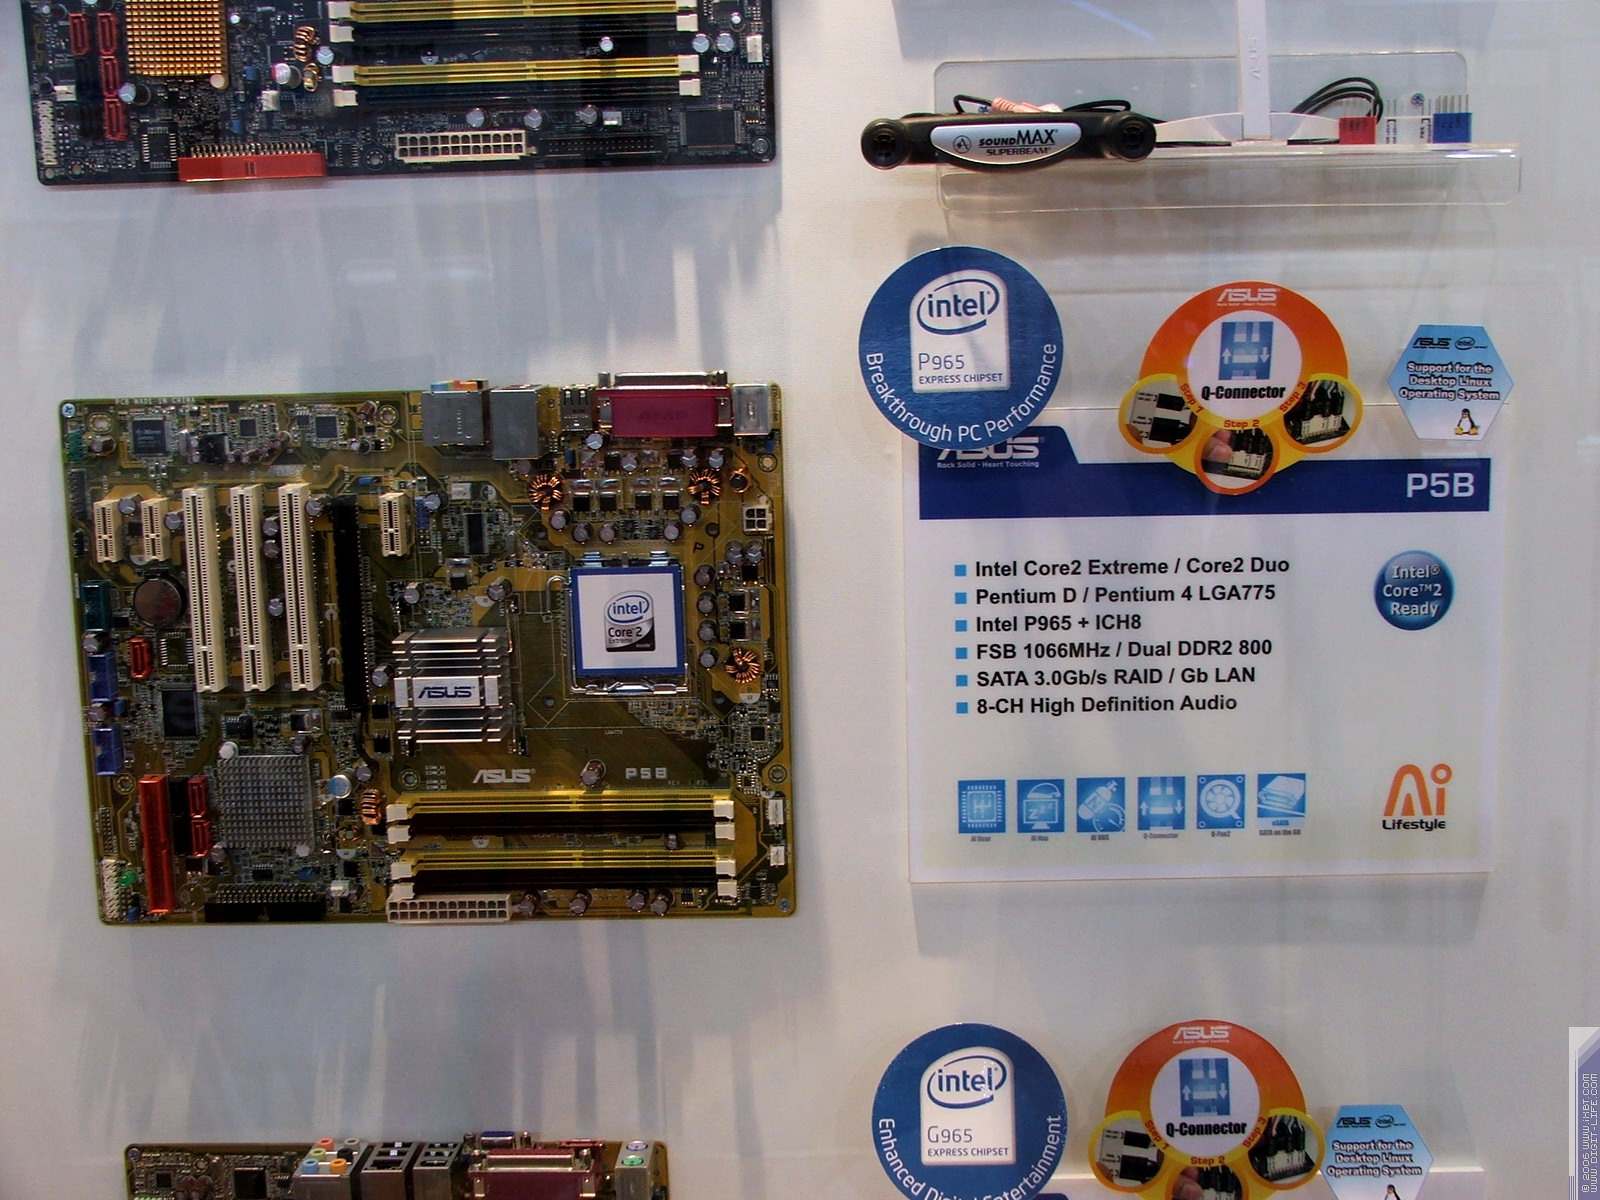 Intel 7 series chipset family. Intel 965gm Express. P965 чипсет. Интел 965 экспресс. Mobile Intel(r) 965 Express Chipset Family Driver.